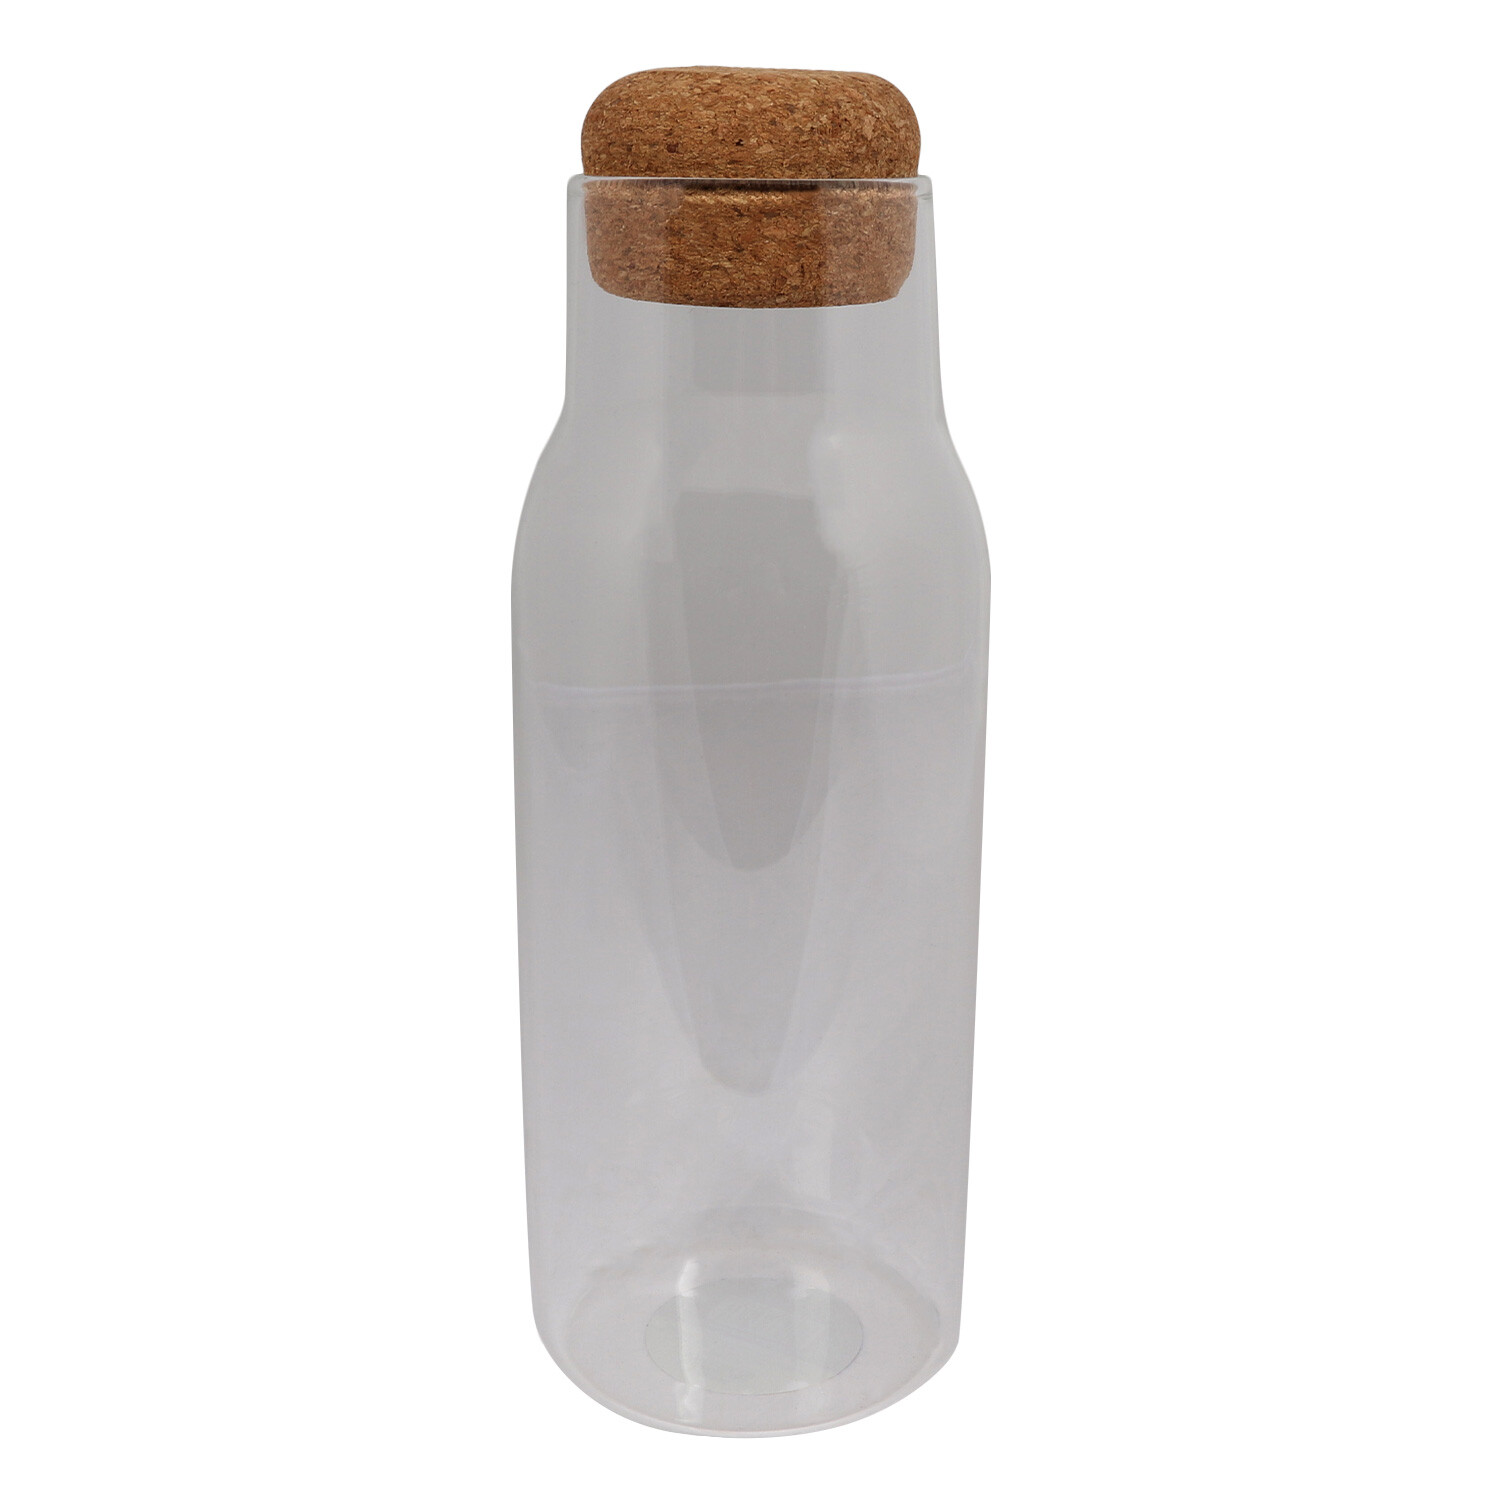 Storage Jar with Cork Lid - Clear / 1l Image 1